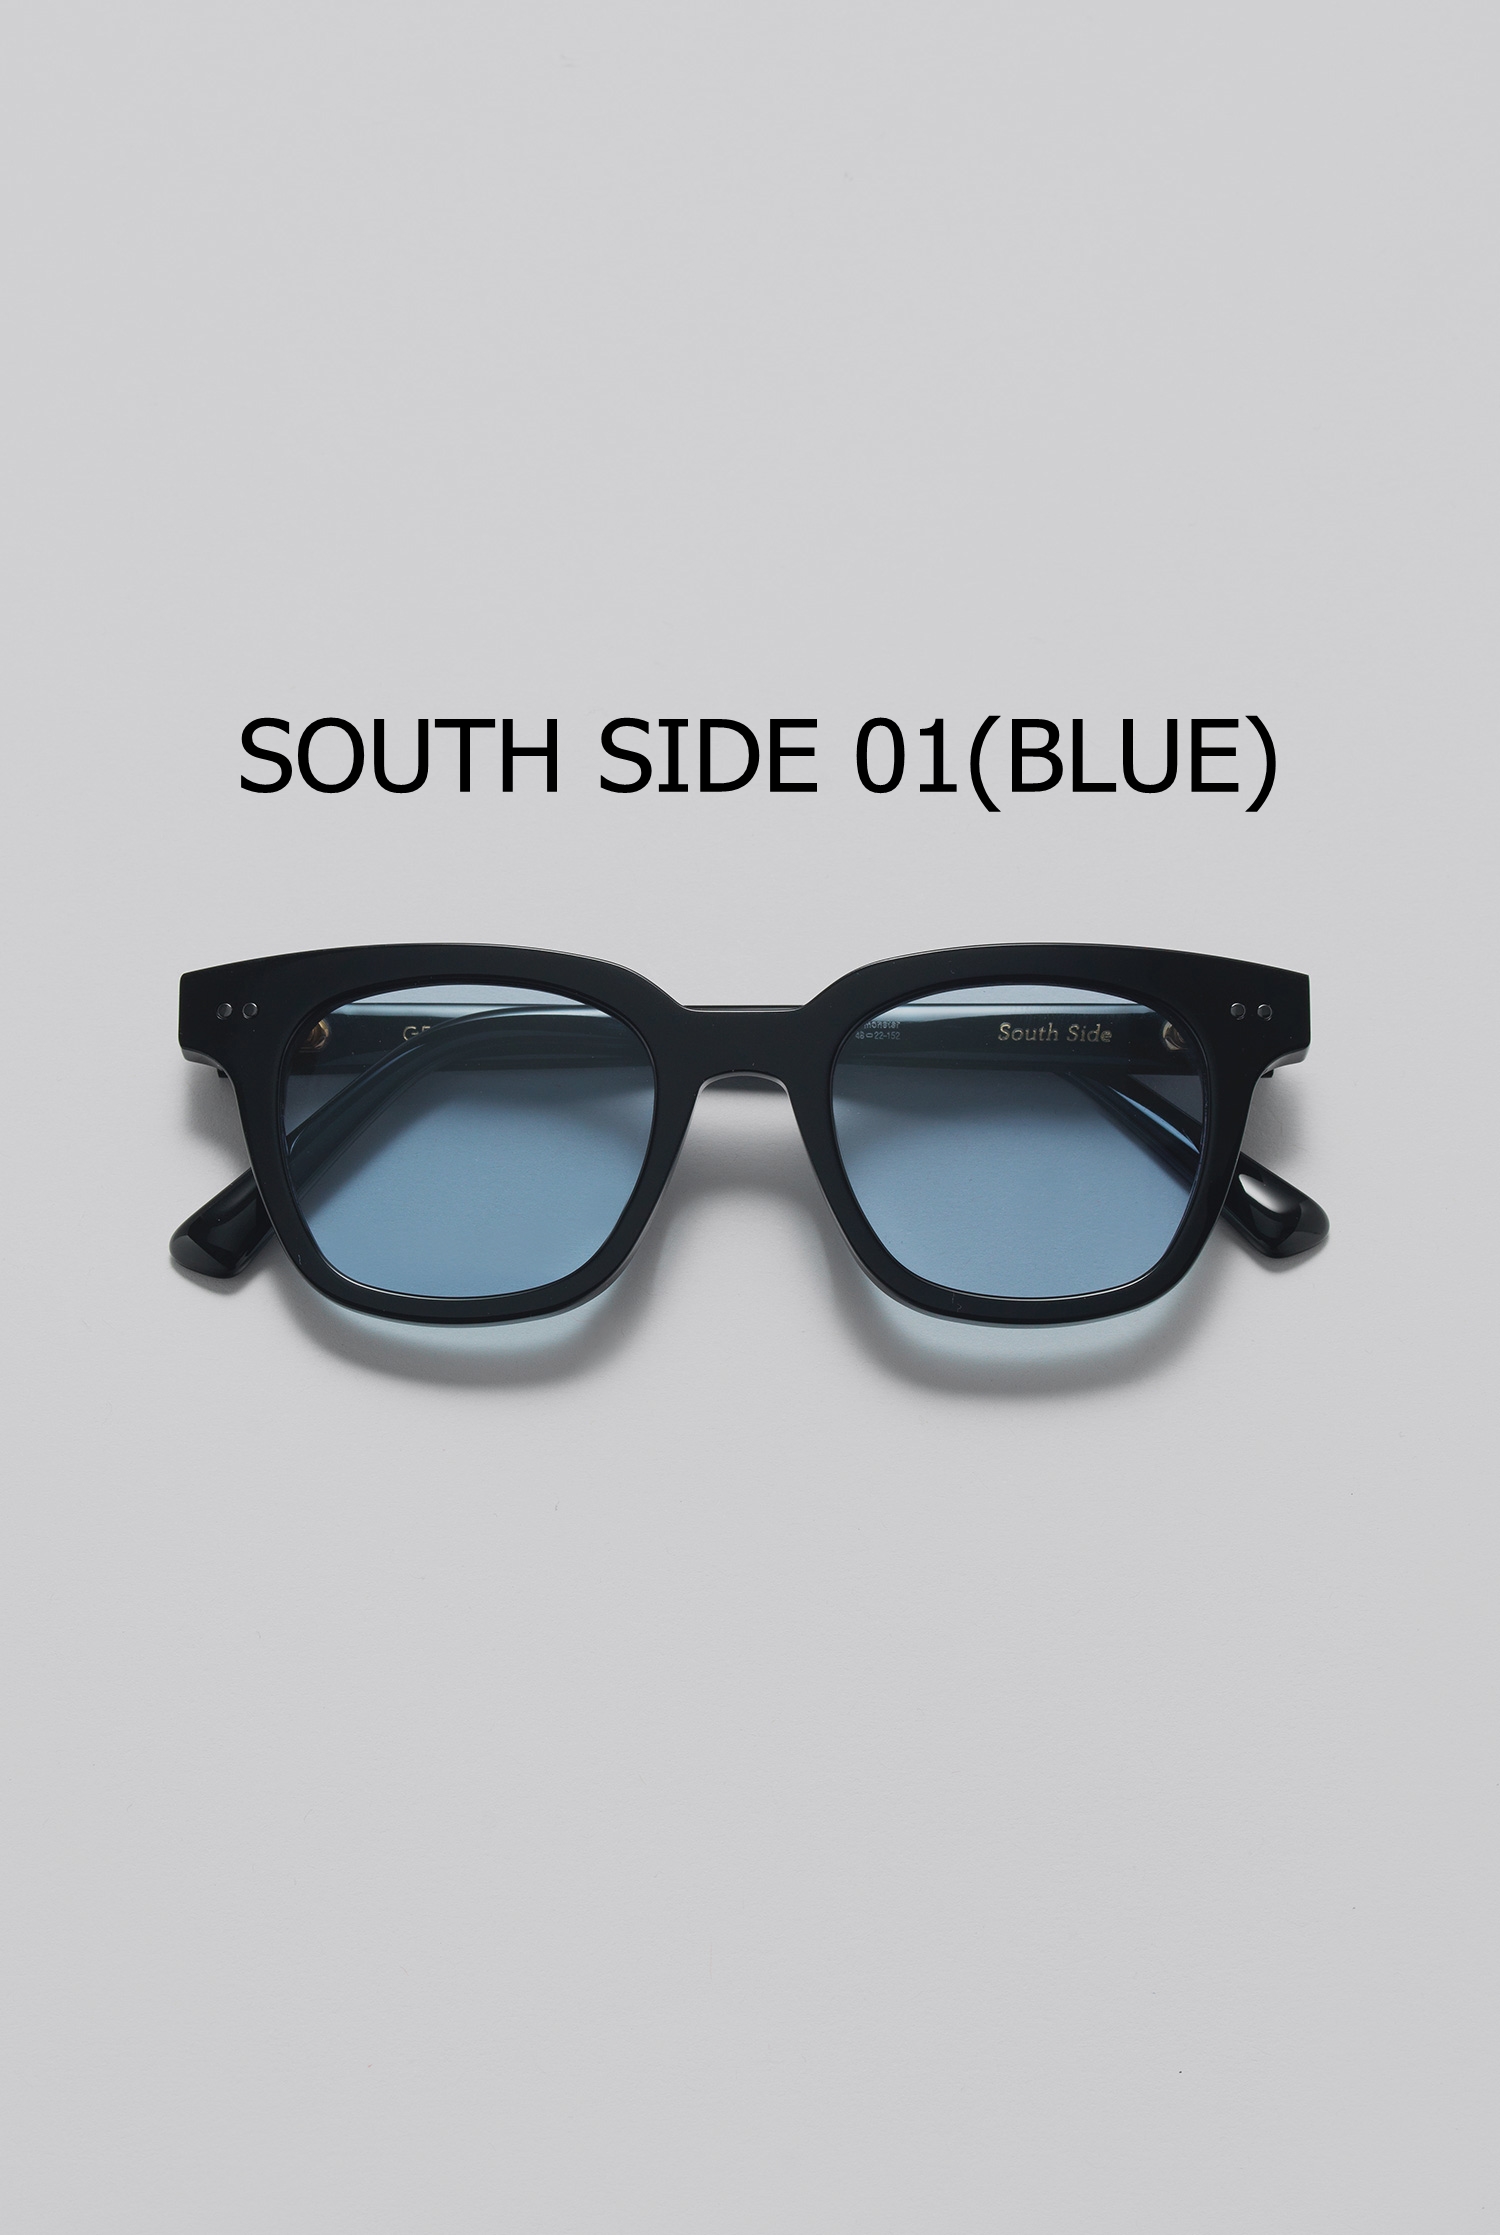 SOUTH SIDE 01(BLUE)